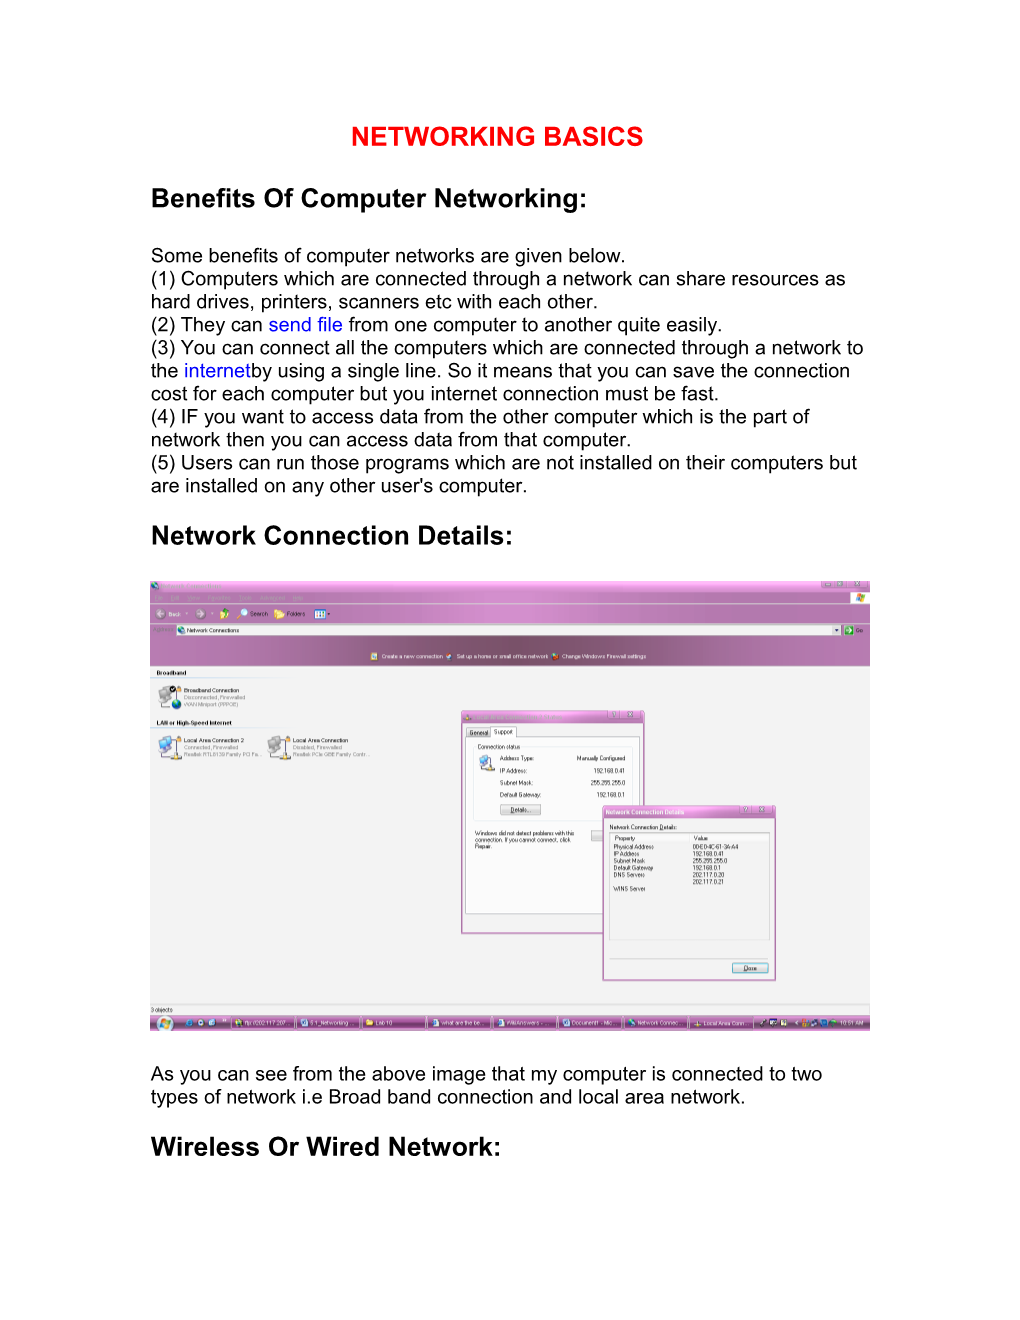 Benefits of Computer Networking